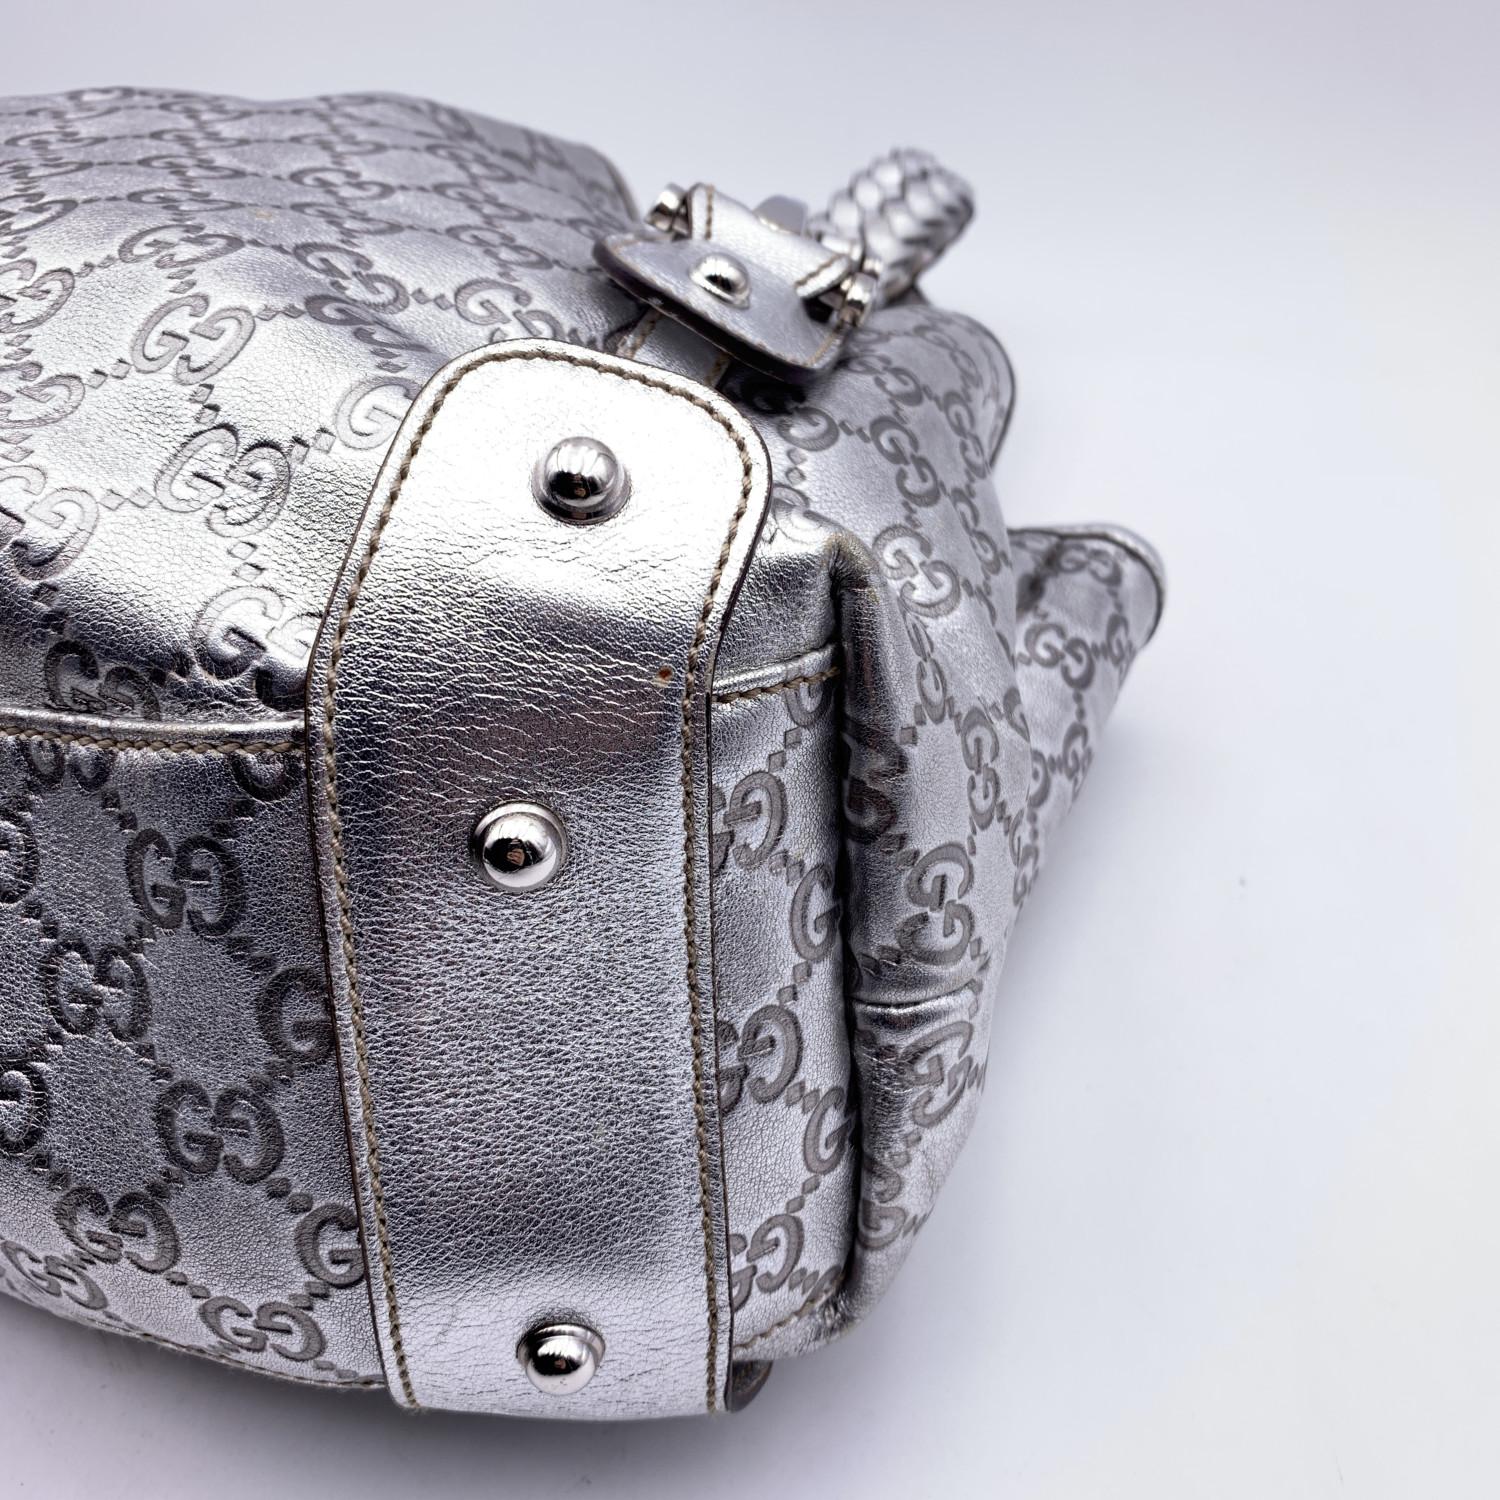 Gucci Silver Monogram Leather Pelham Tote Bag with Horsebit Handbag 3